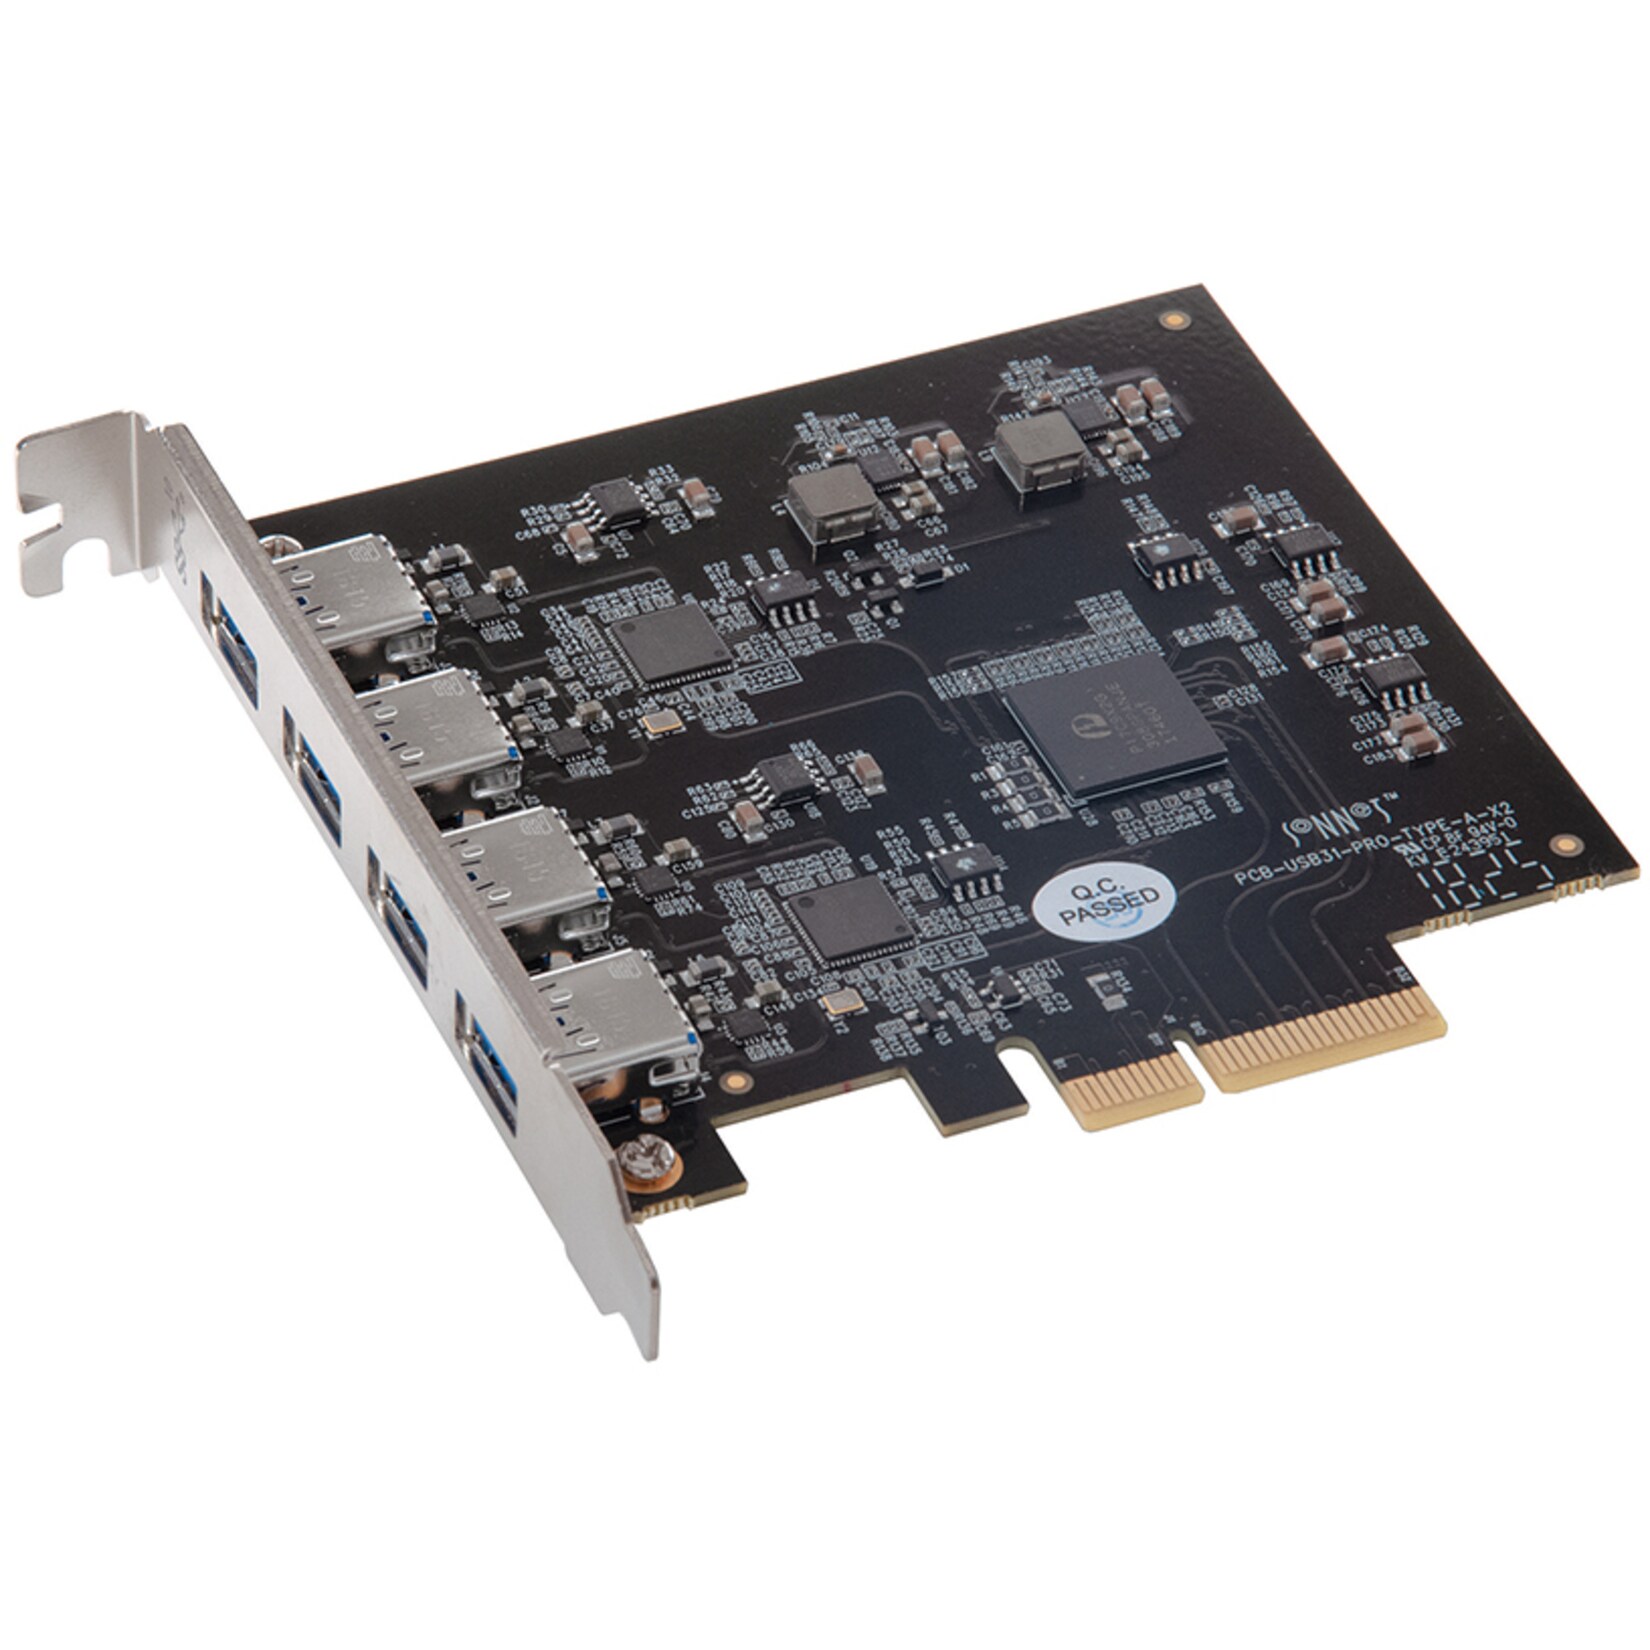 Sonnet USB-Controller Allegro Pro USB 3.2 PCIe Card